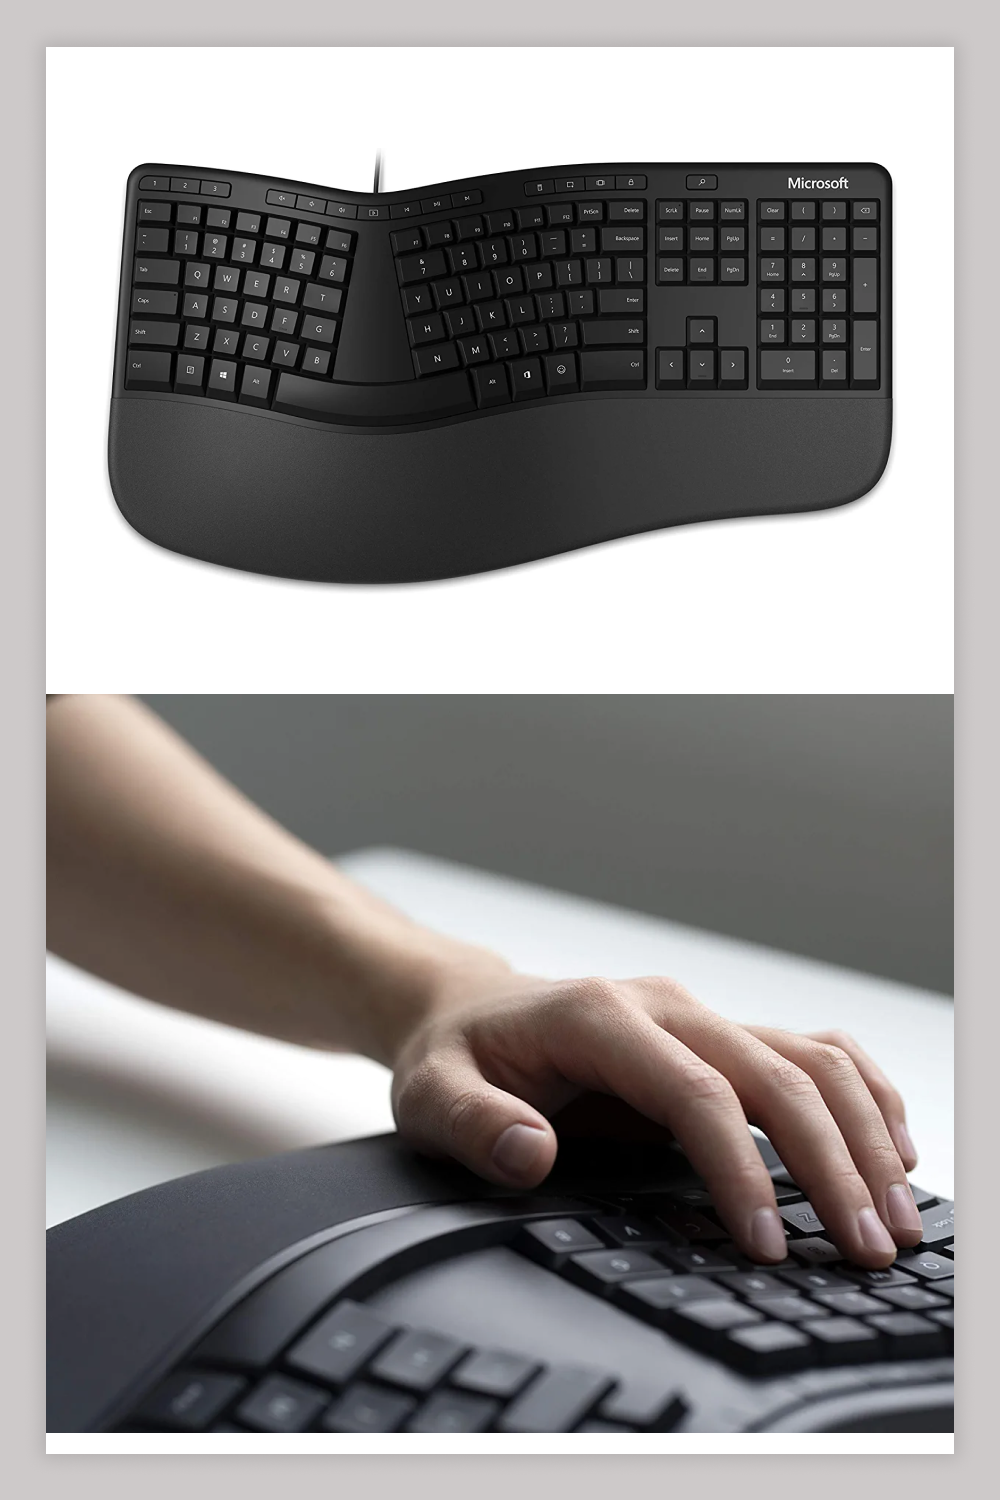 Wired black Microsoft Ergonomic Keyboard.